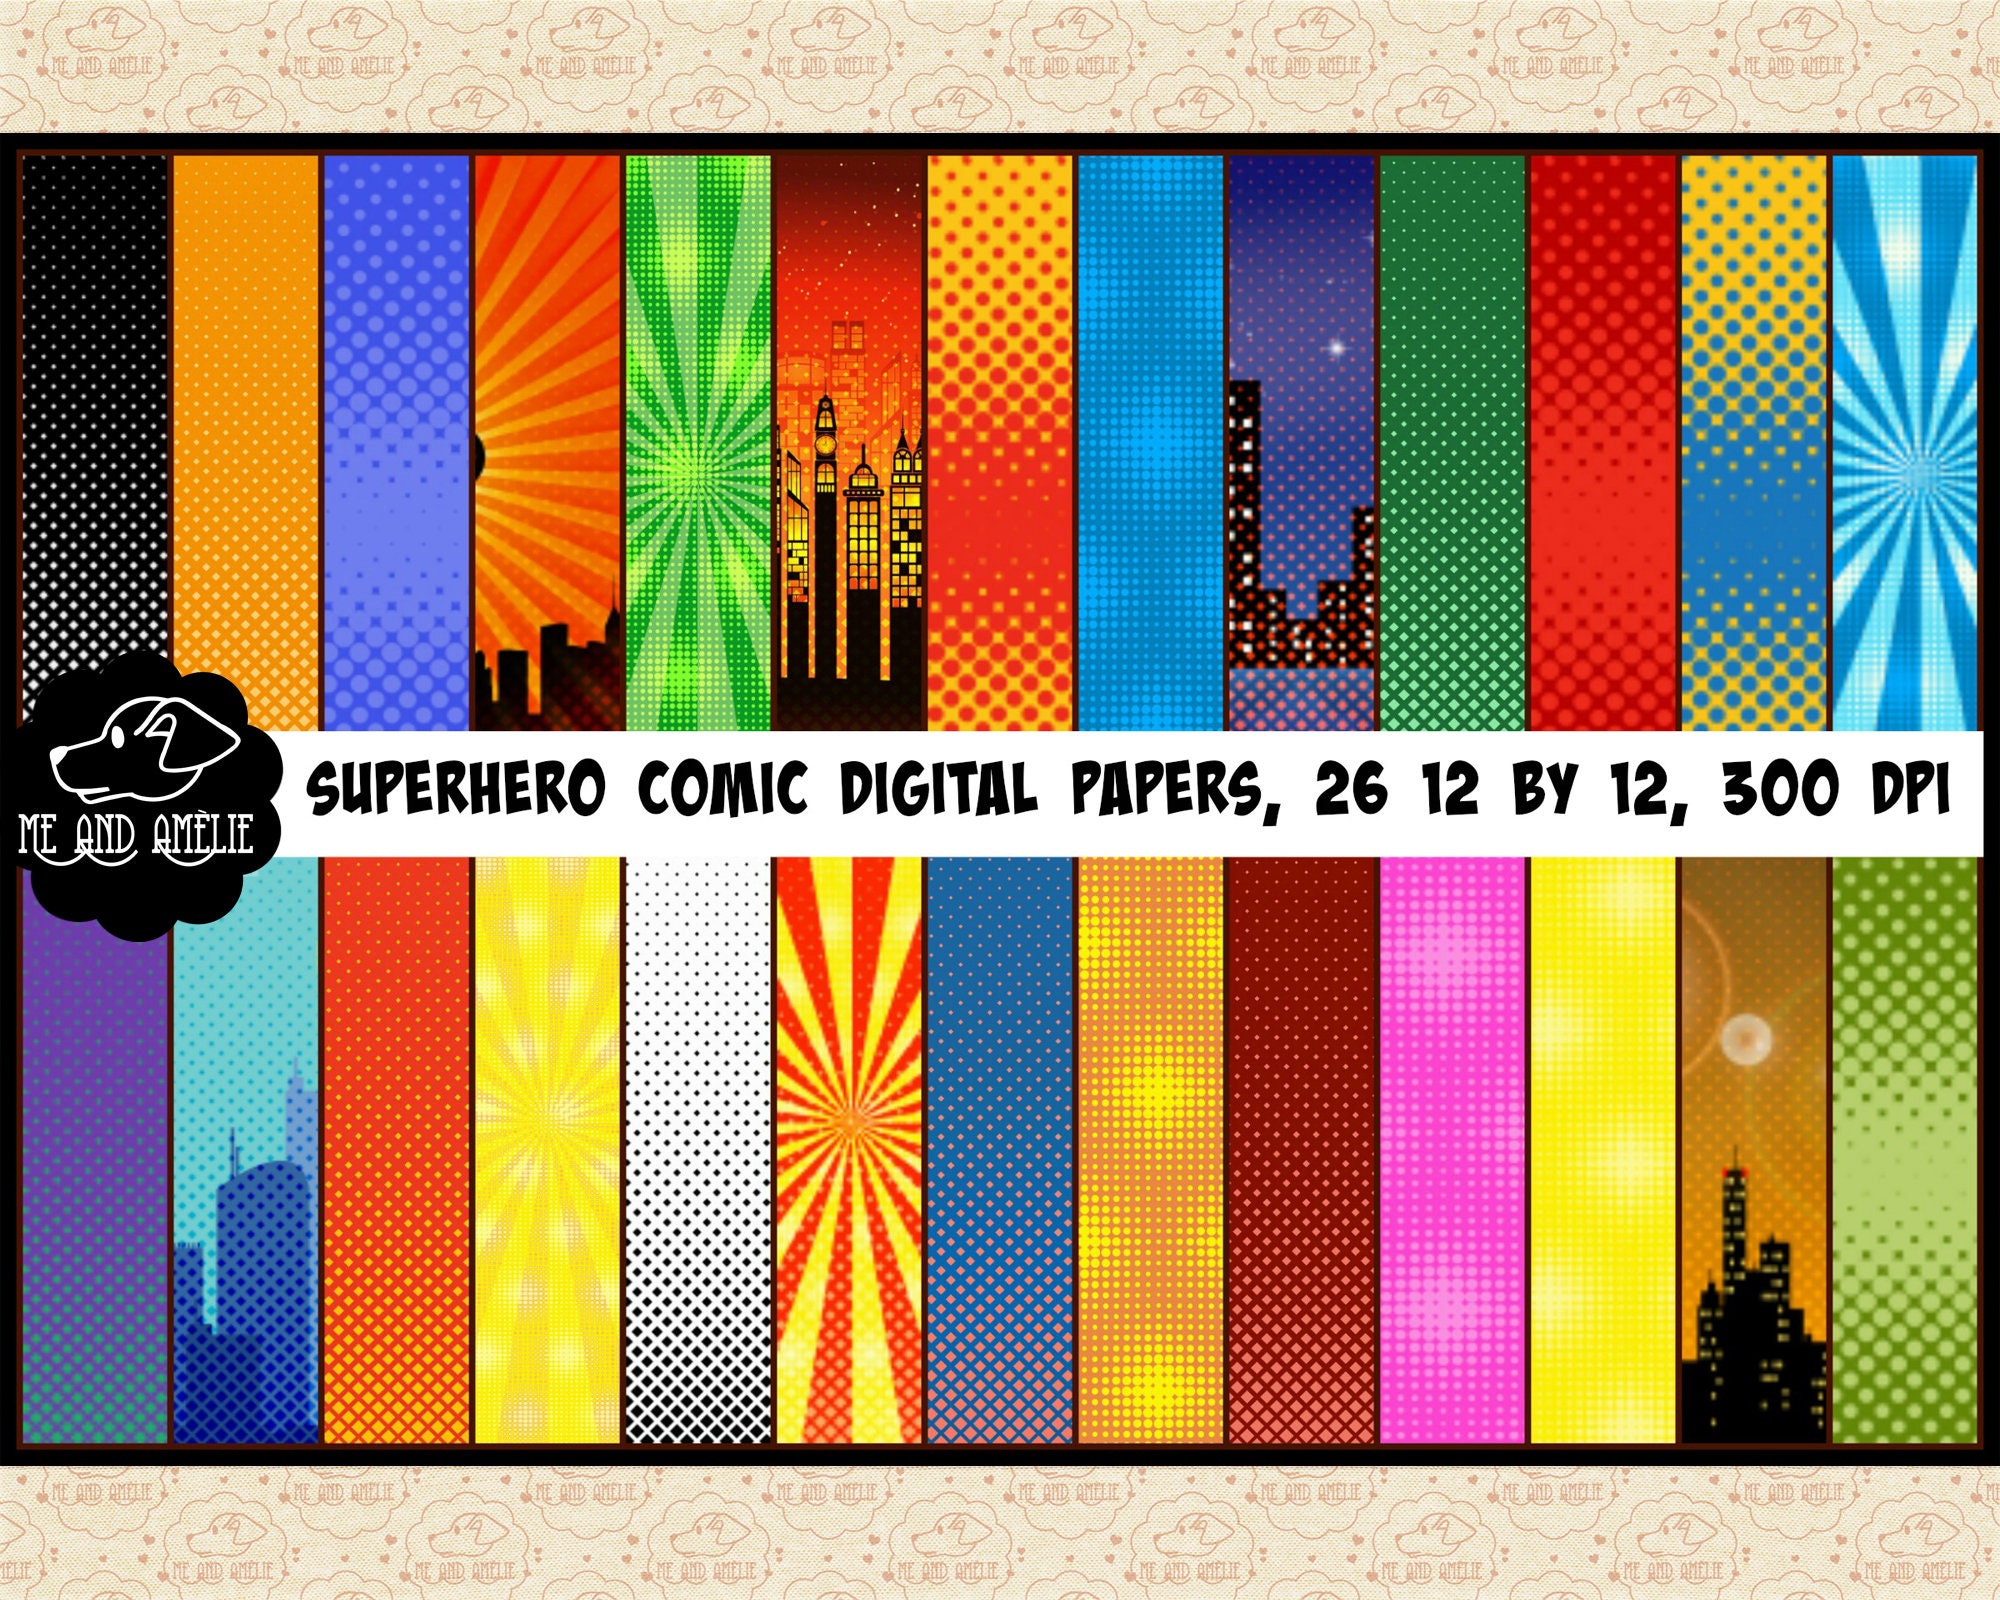 Superhero Scrapbook Paper Pack 8.5 X 11 Graphic by DigitalPrintableMe ·  Creative Fabrica